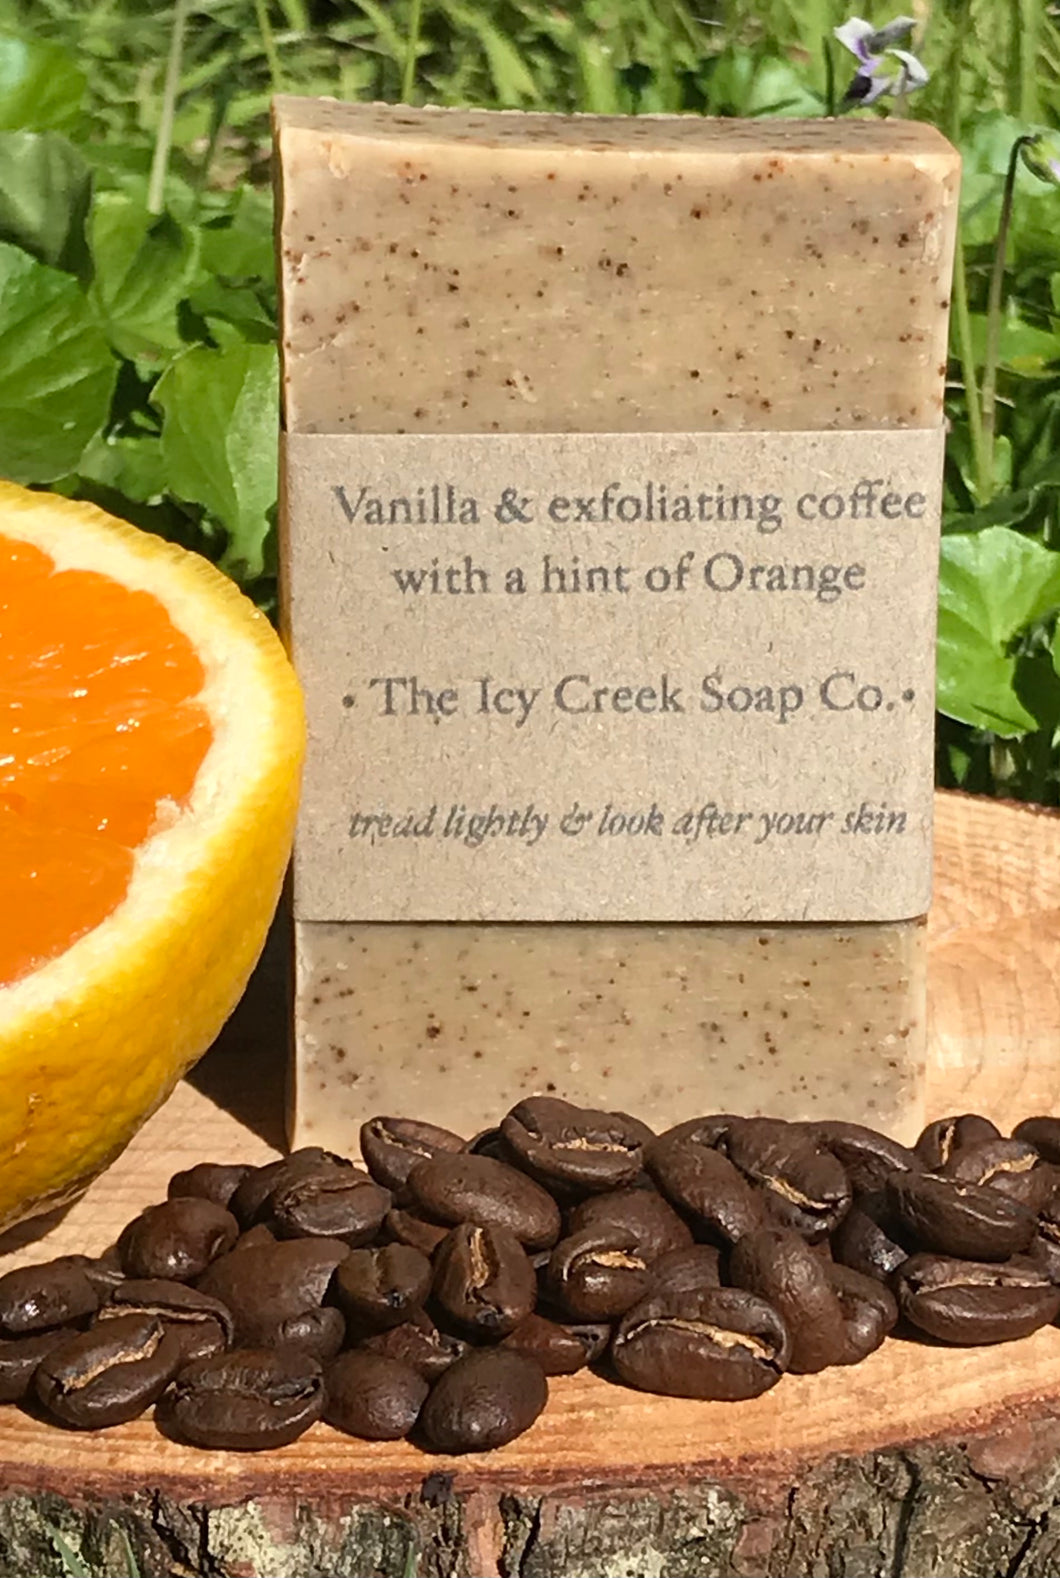 Exfoliating coffee with Vanilla & a hint of Orange